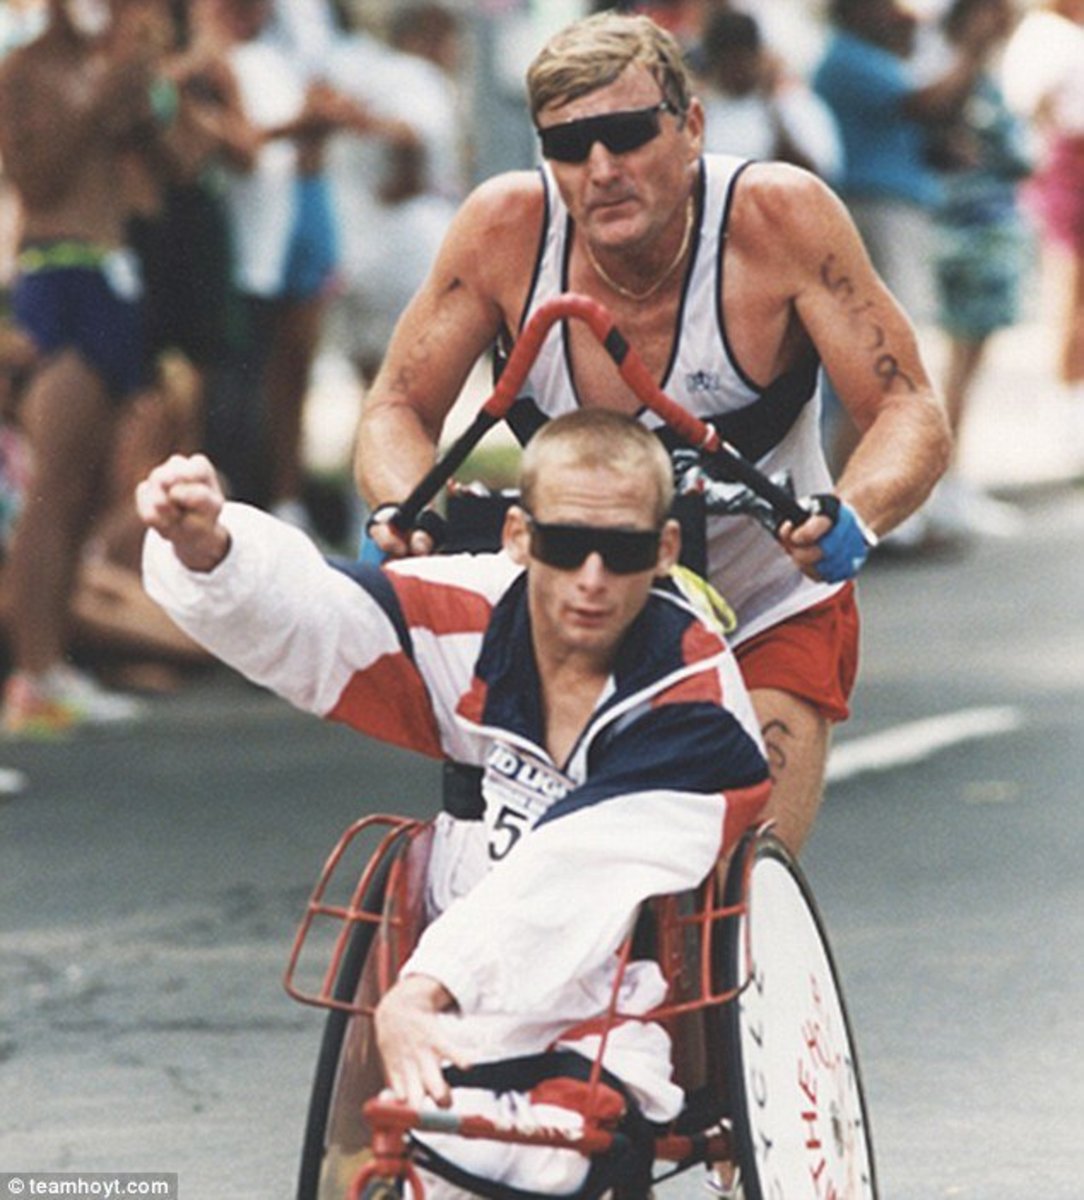 Dick and Rick Hoyt in Ironman Triathlon